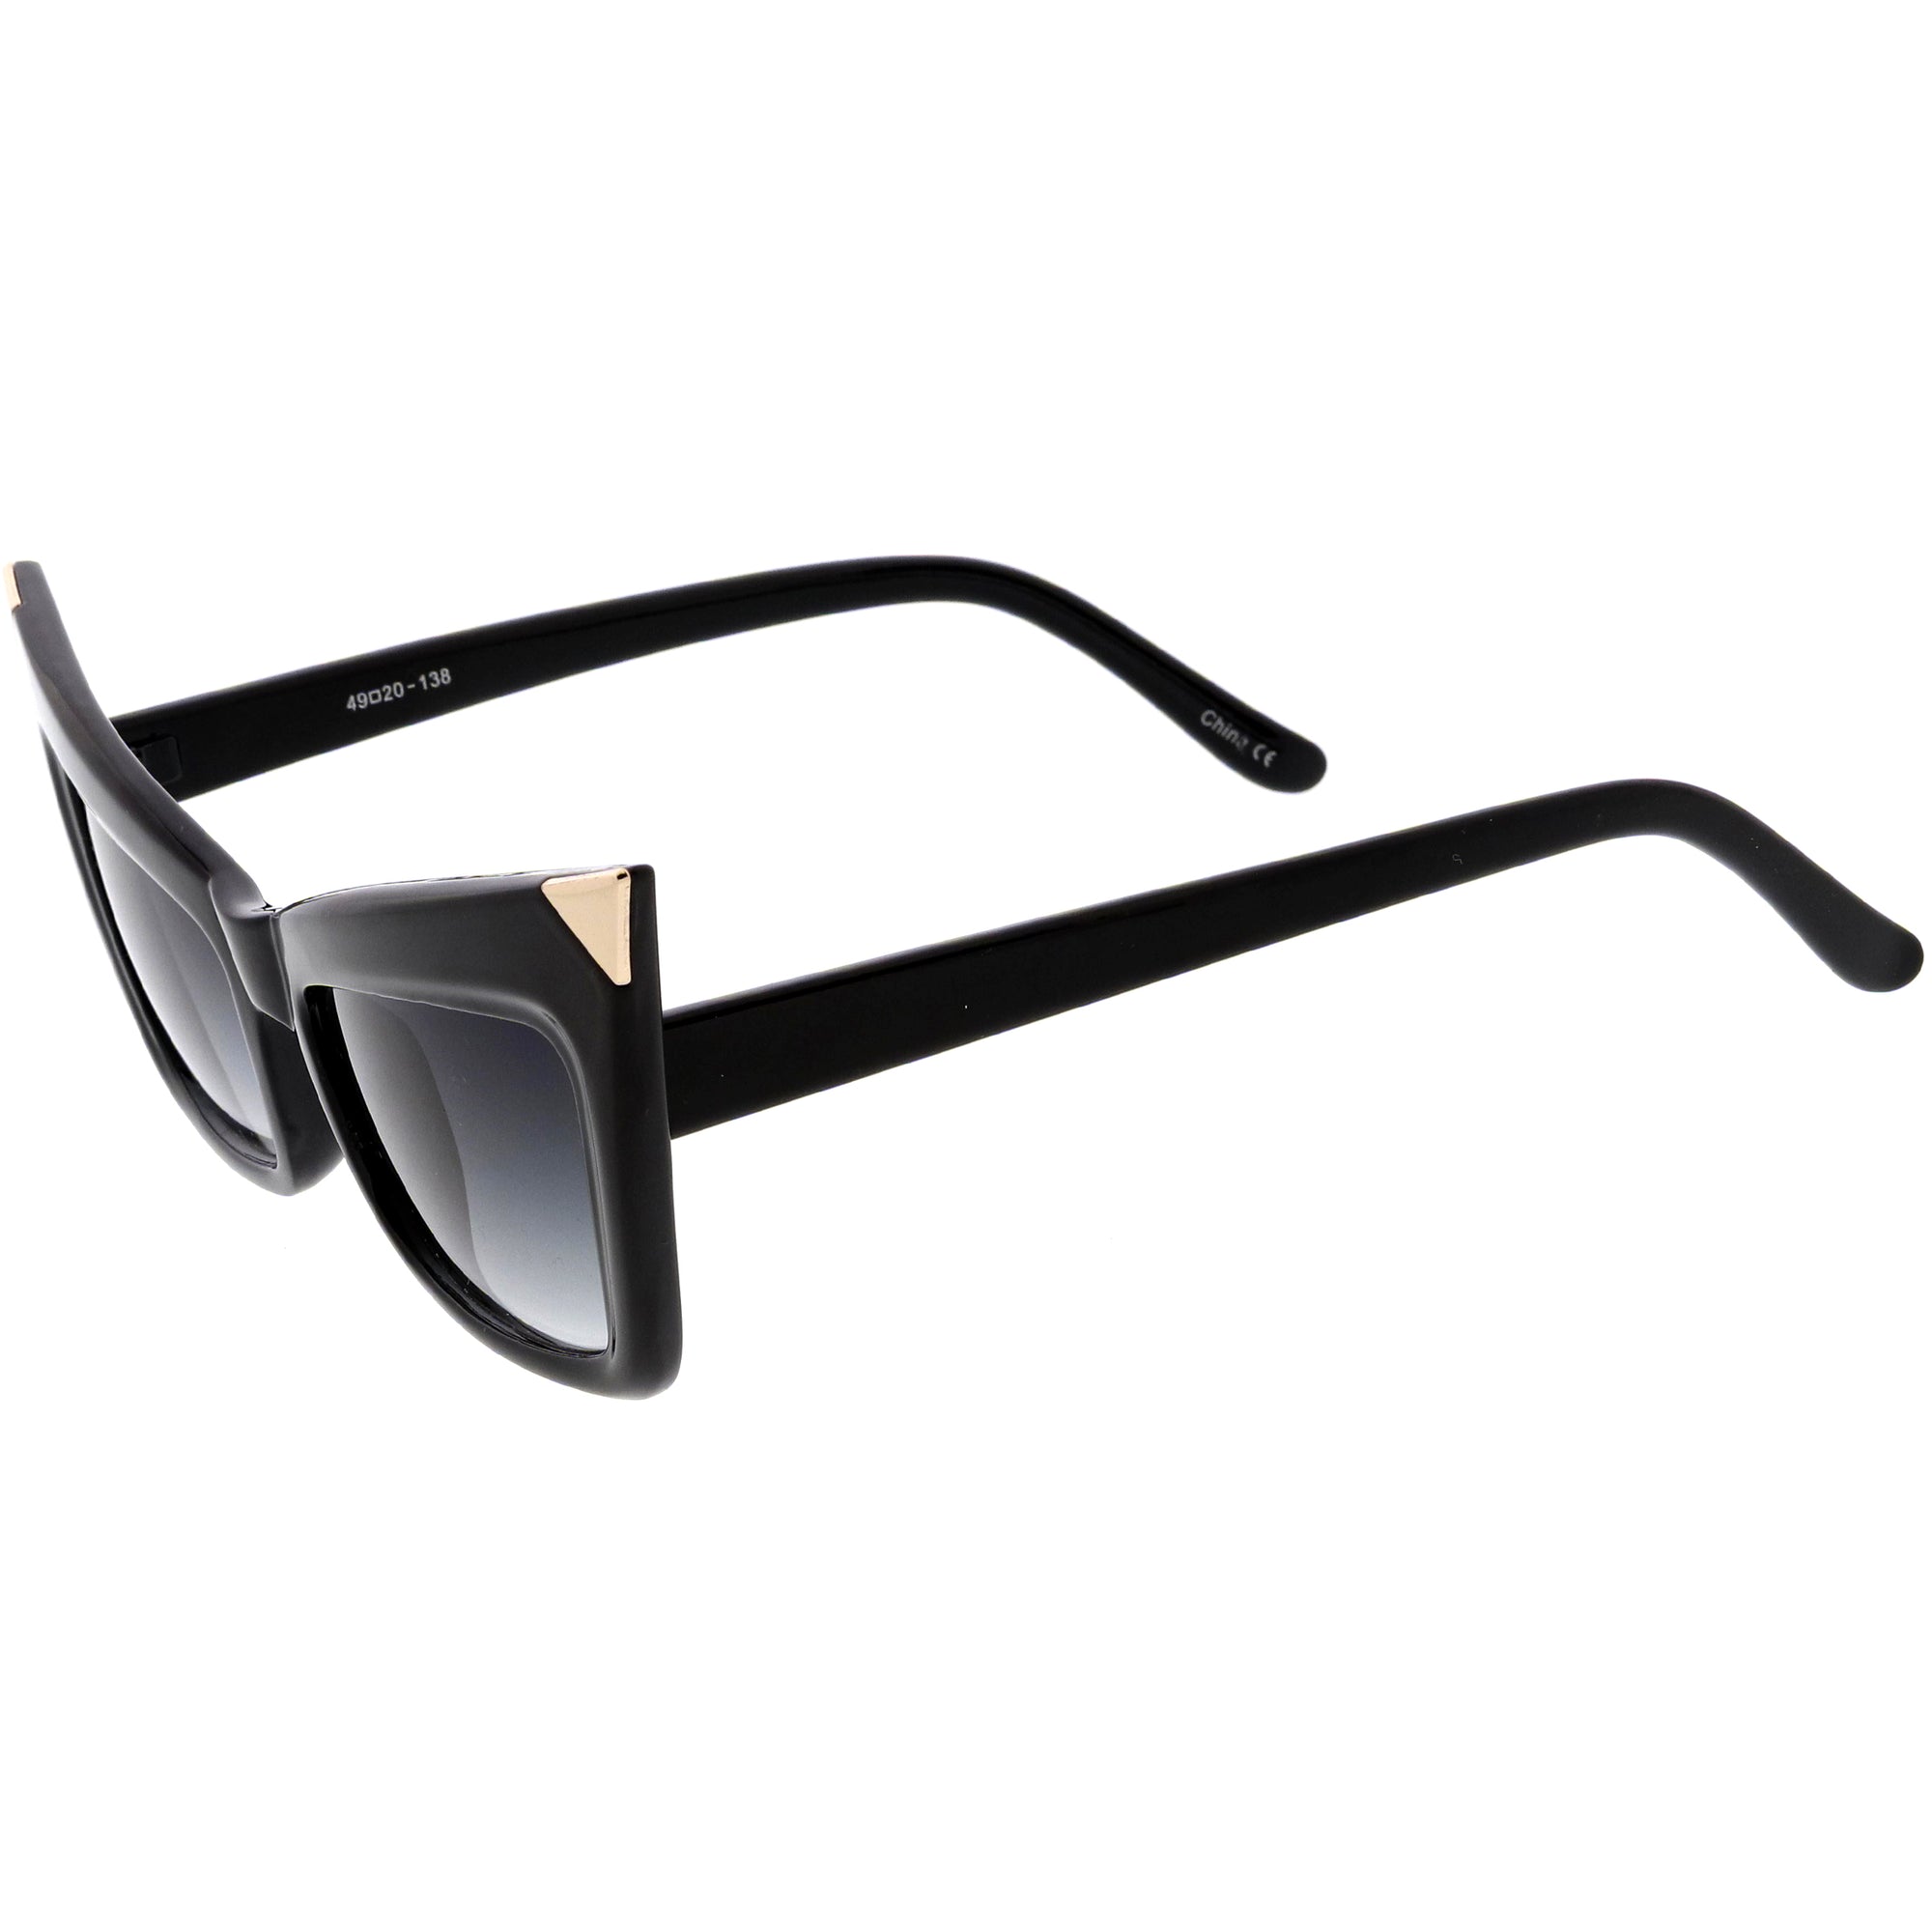 Sharp High-Pointed Metal Tip Designer-Inspired Fashion Cat Eye Sunglasses D004, Black Gold / Lavender | zeroUV